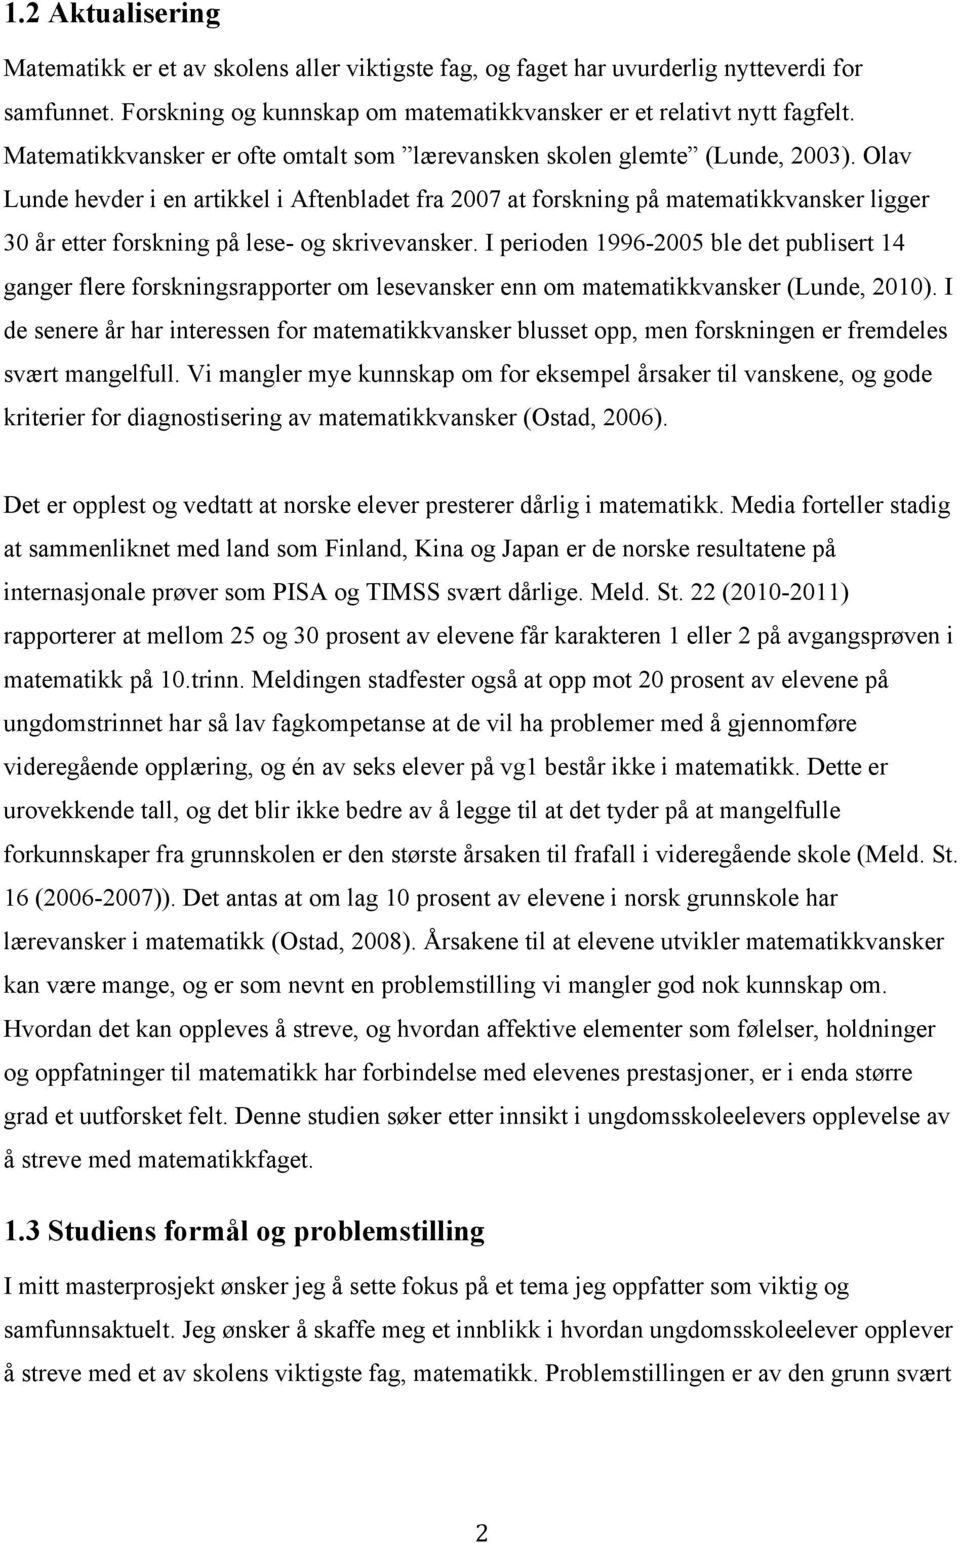 Olav Lunde hevder i en artikkel i Aftenbladet fra 2007 at forskning på matematikkvansker ligger 30 år etter forskning på lese- og skrivevansker.